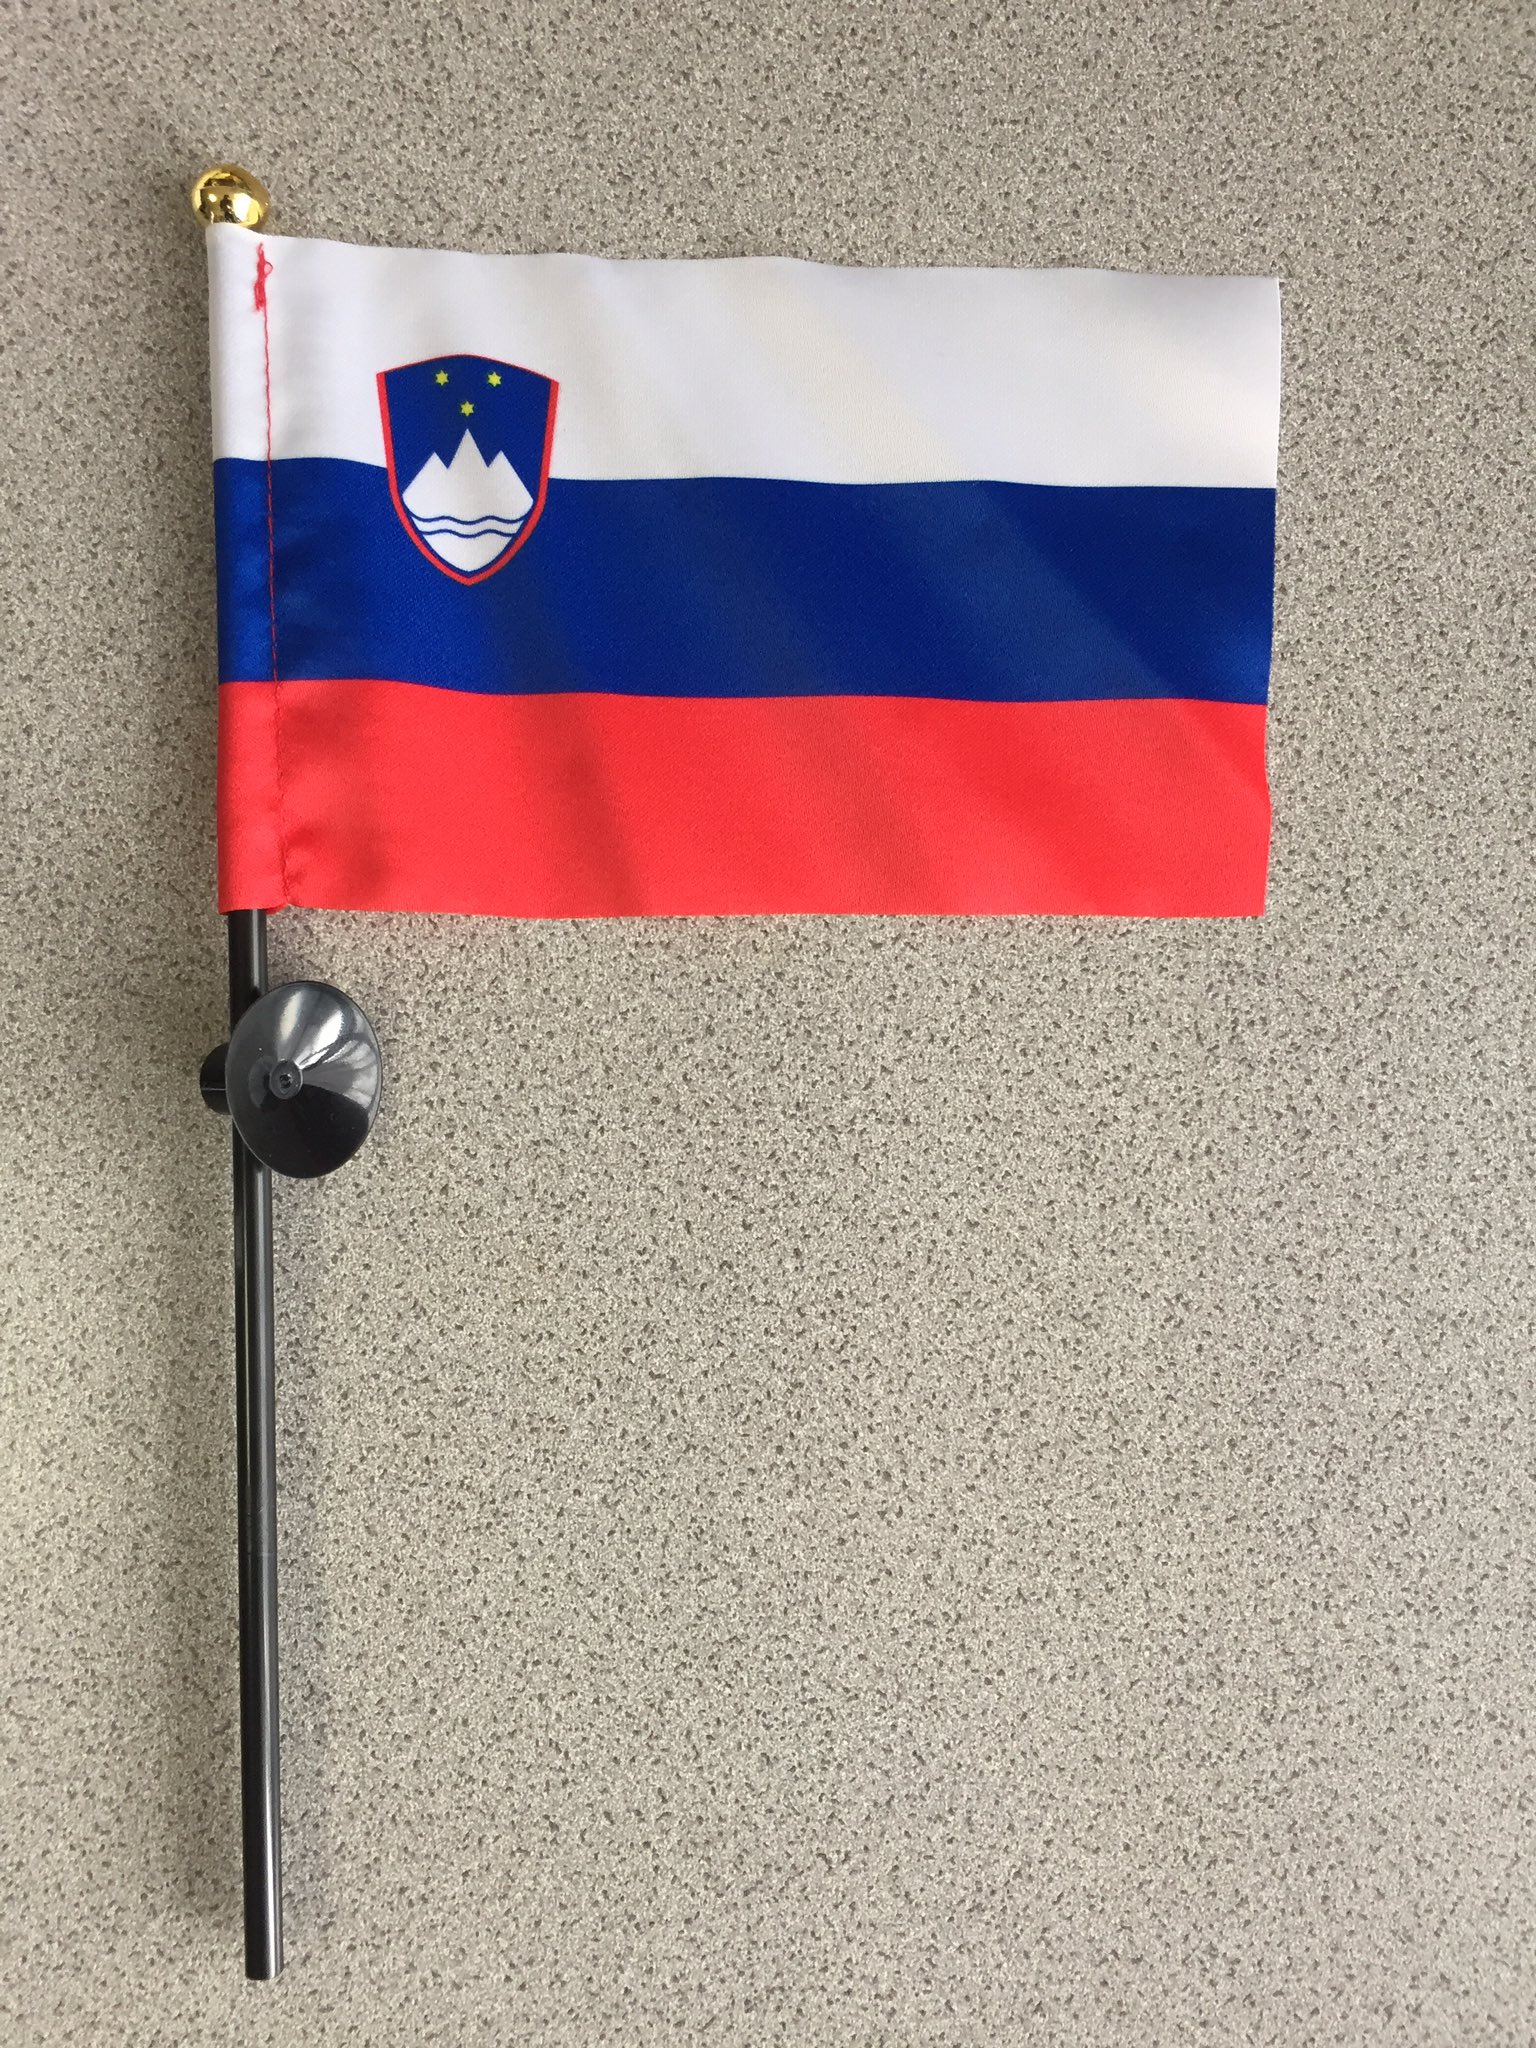 Kashiwasan 小さいけどスロベニア国旗届いた ネイツ頑張れ T Co 8djekjzp2t Twitter